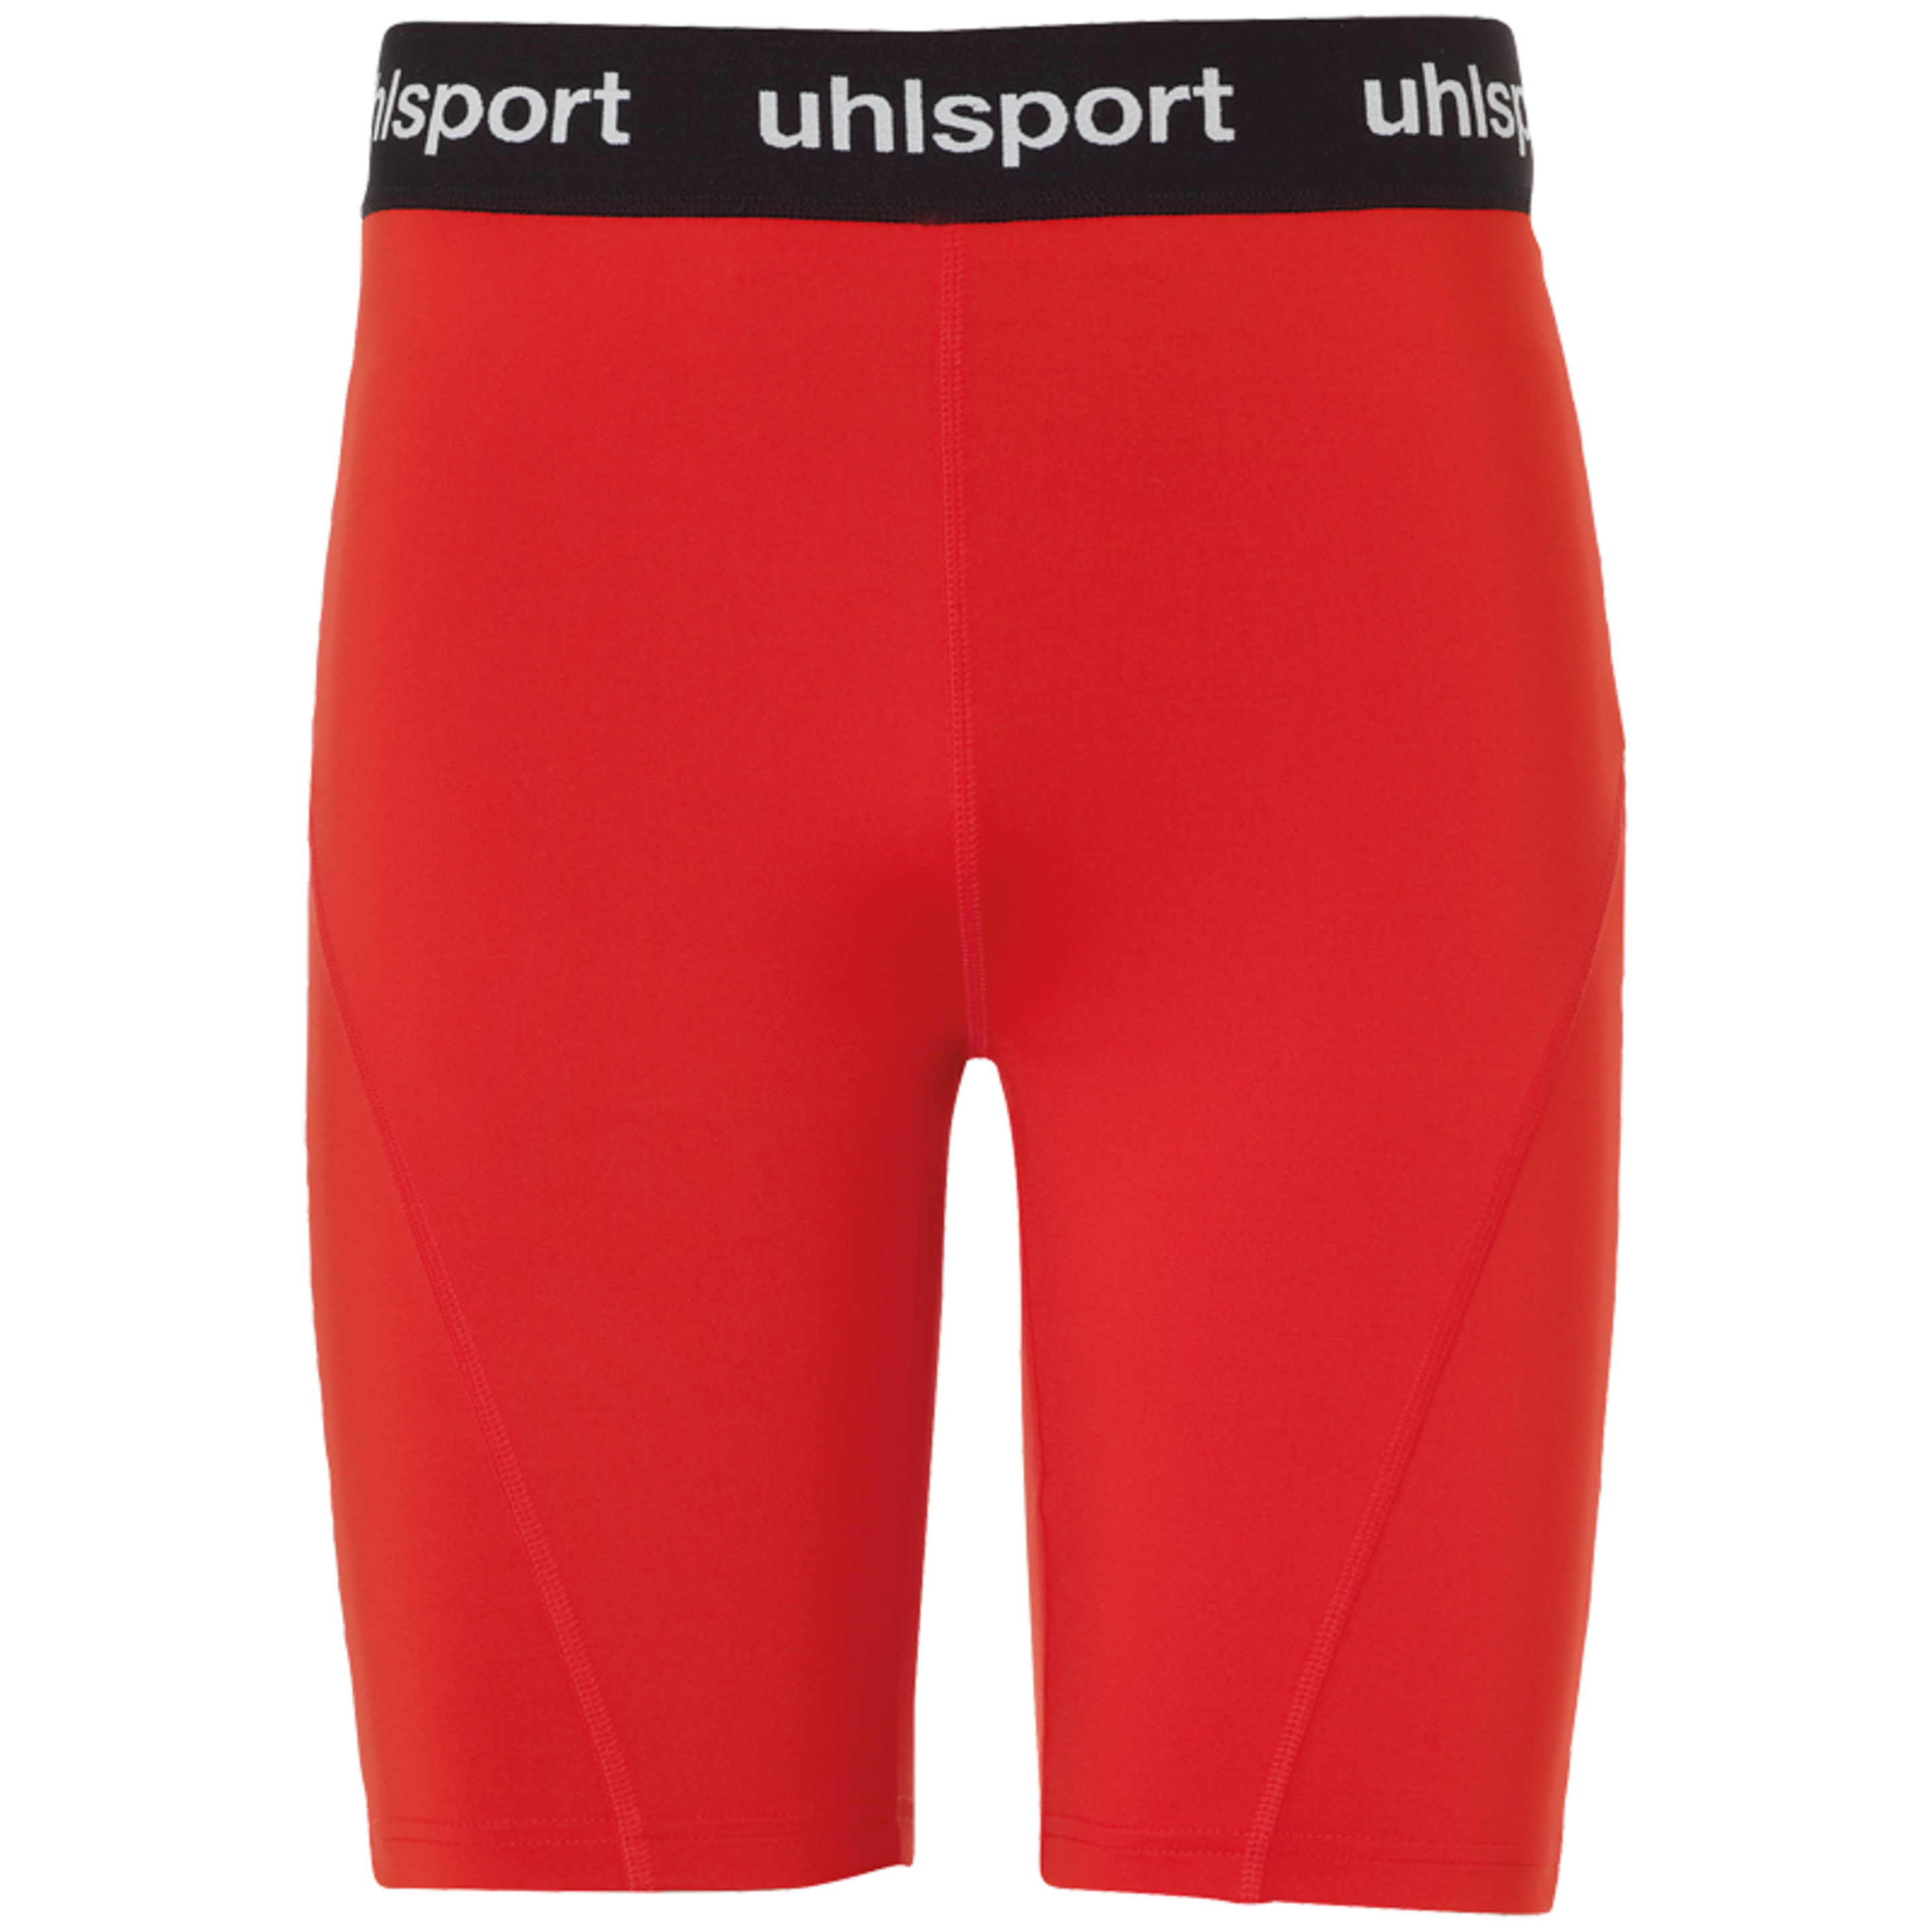 Distinction Pro Tights Red Uhlsport - rojo - 